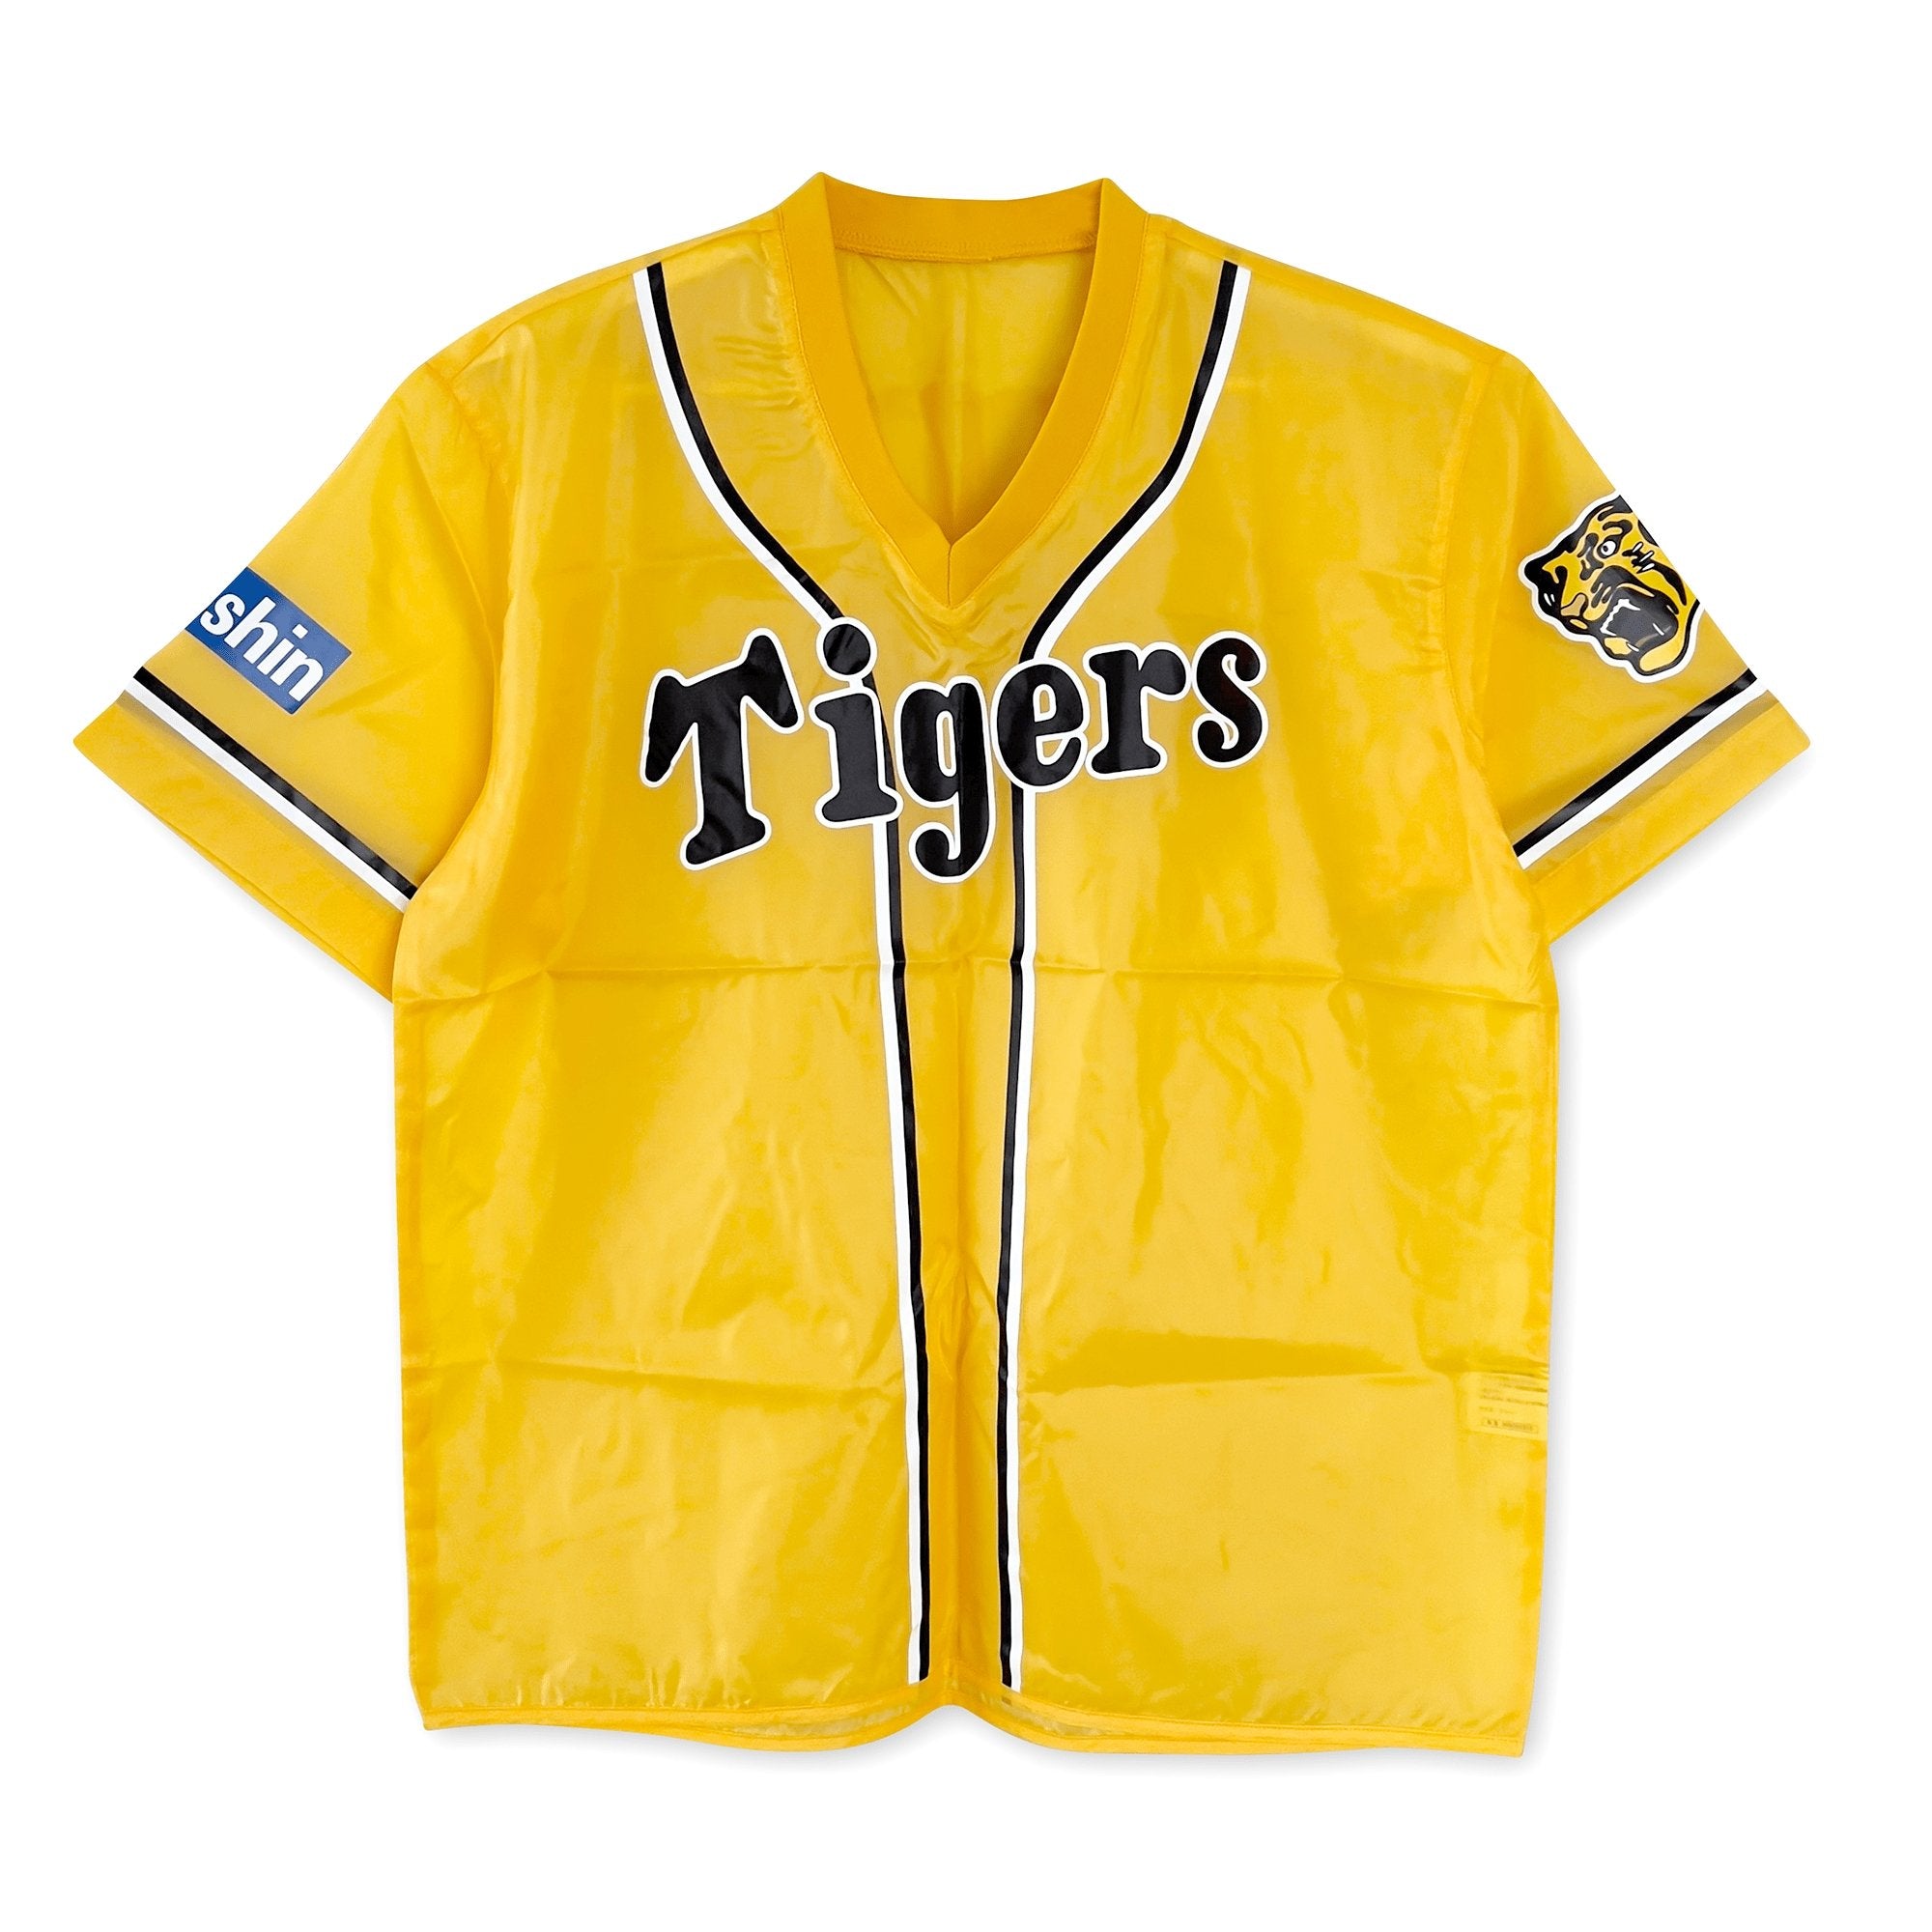 Vintage 2003 Japan Hanshin Tigers Baseball Windbreaker Jersey Shirt + CD